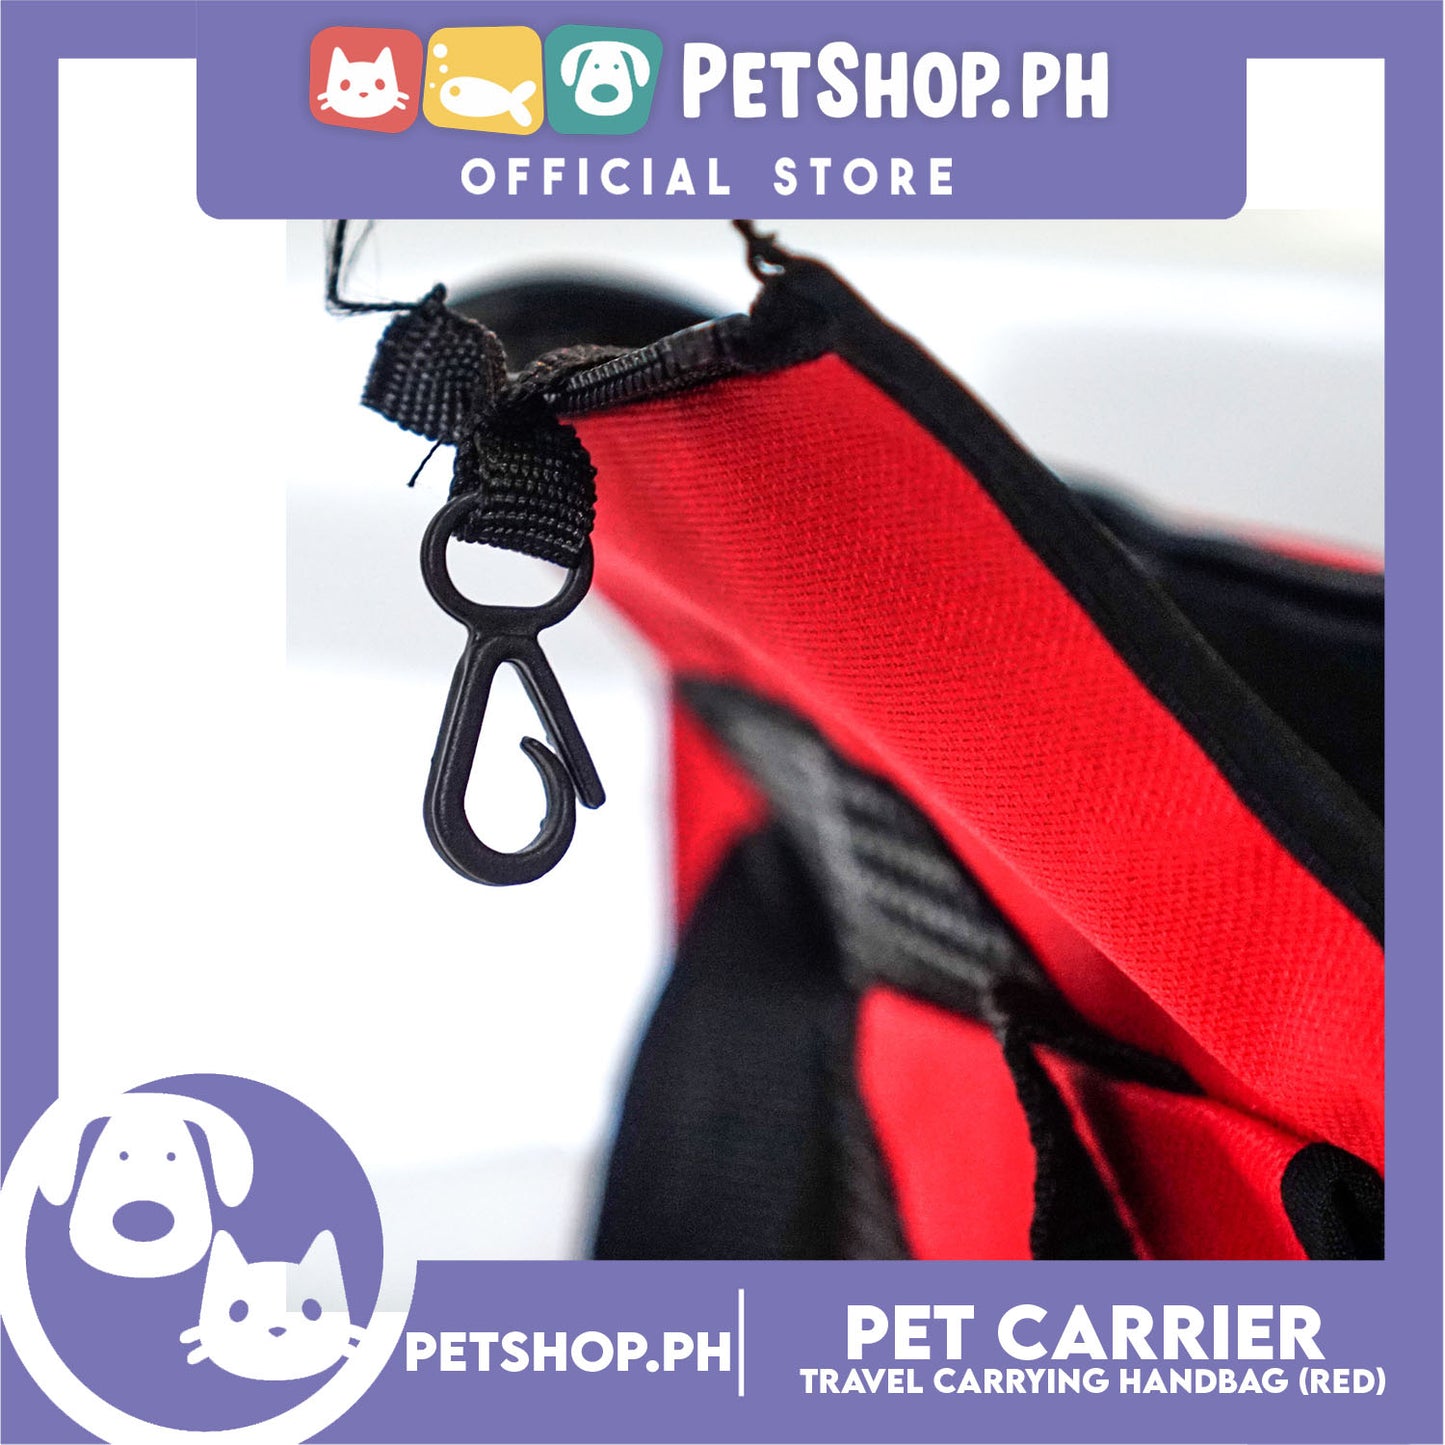 Pet Carrier Summer Travel Carrying Handbag, Shoulder Bag L34 x W13 x H22 Small (Red)